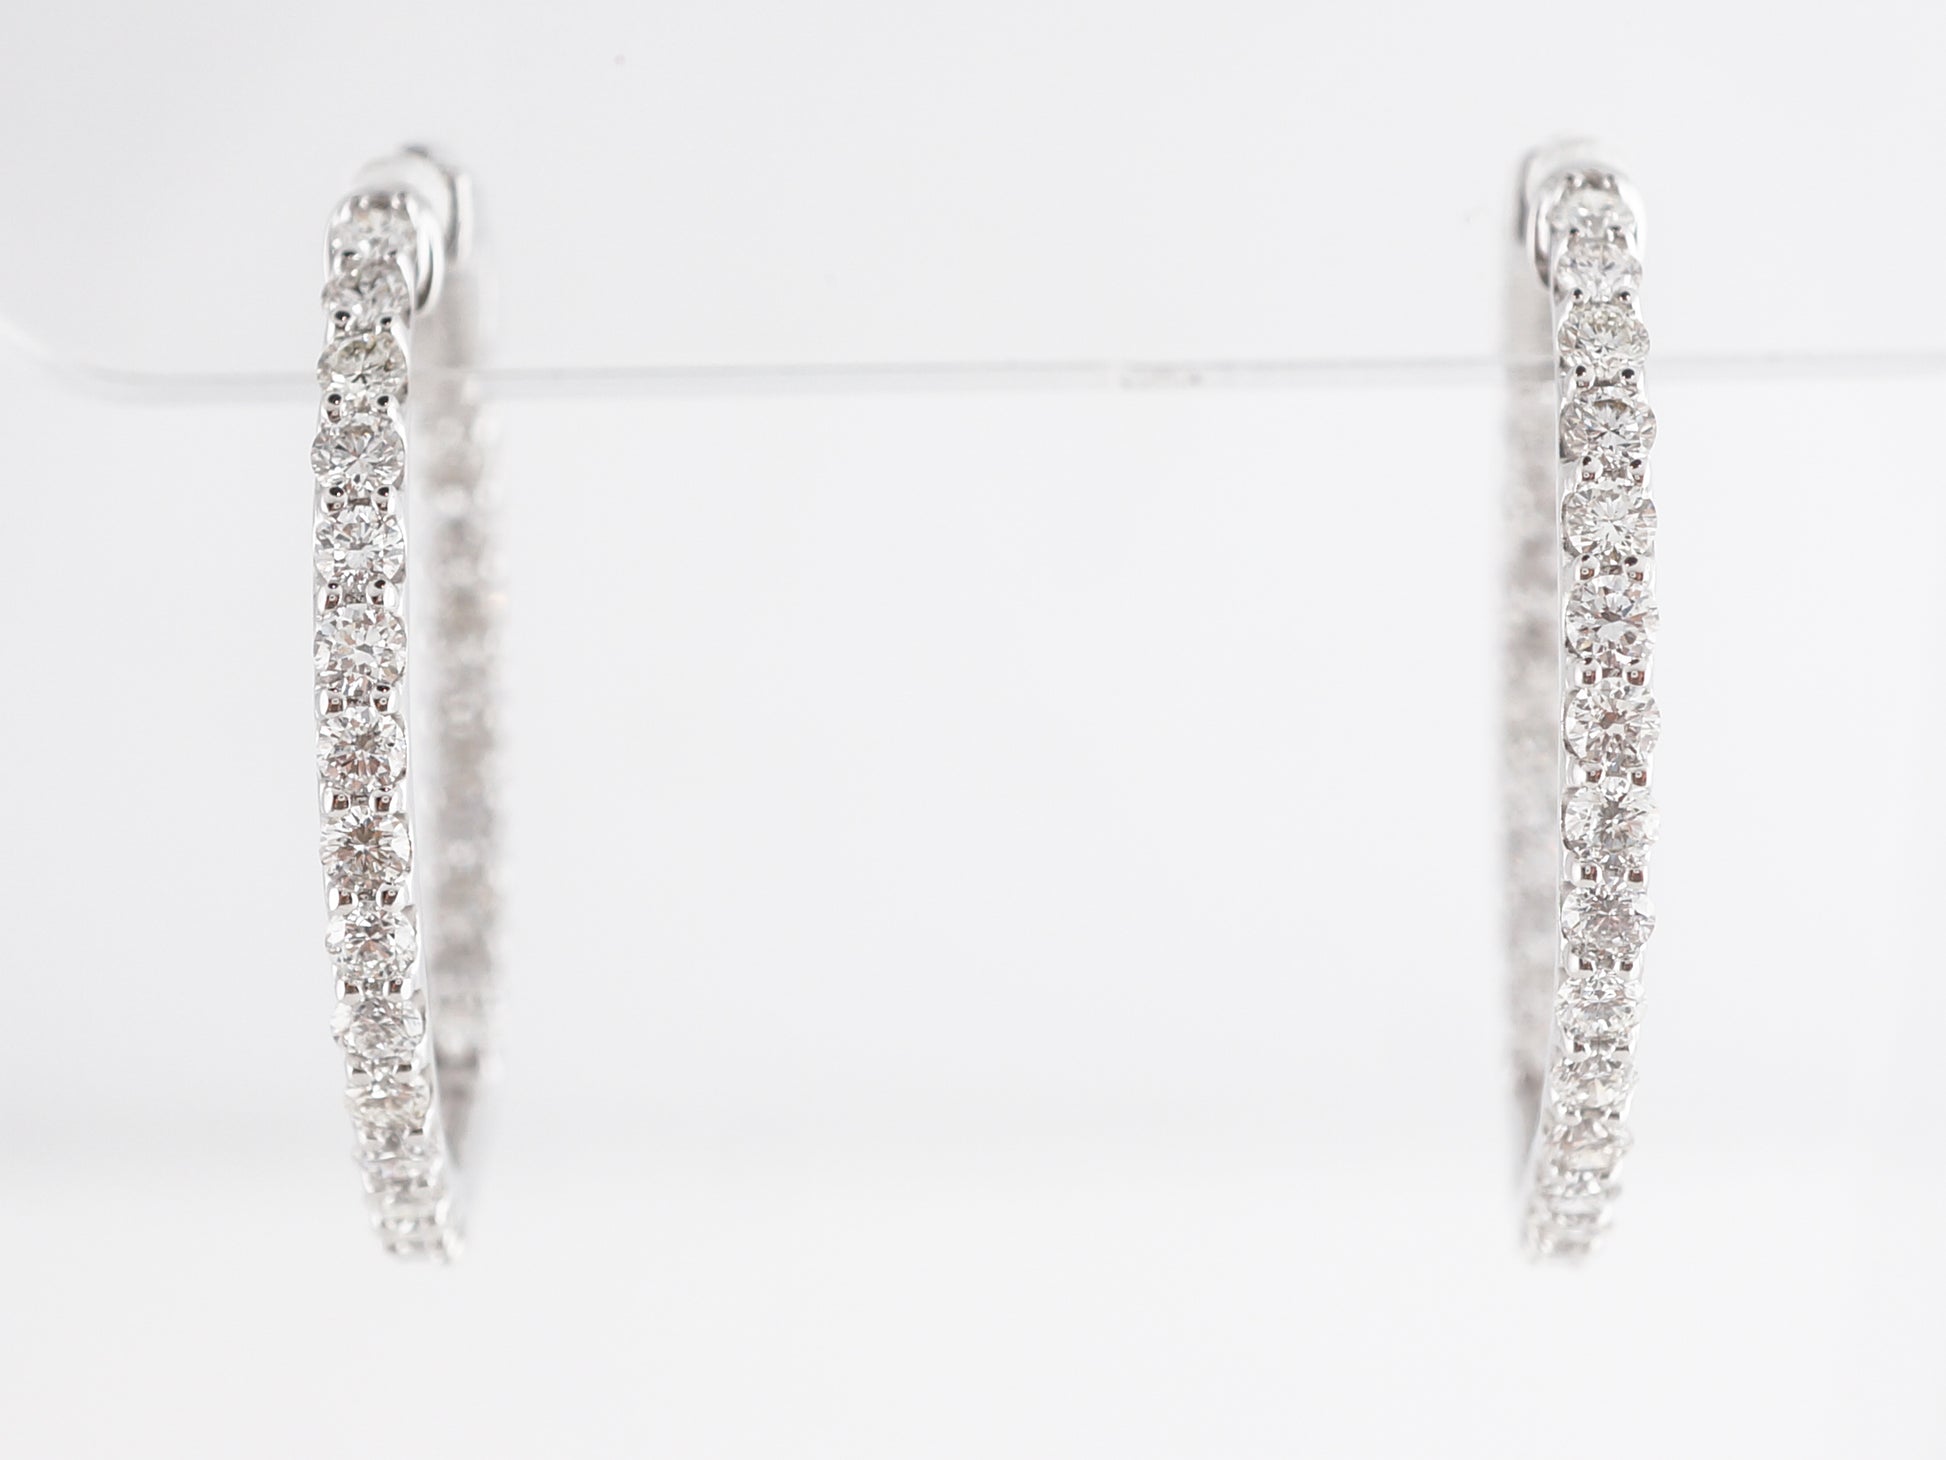 2 Carat Diamond Hoop Earrings in 14k White Gold